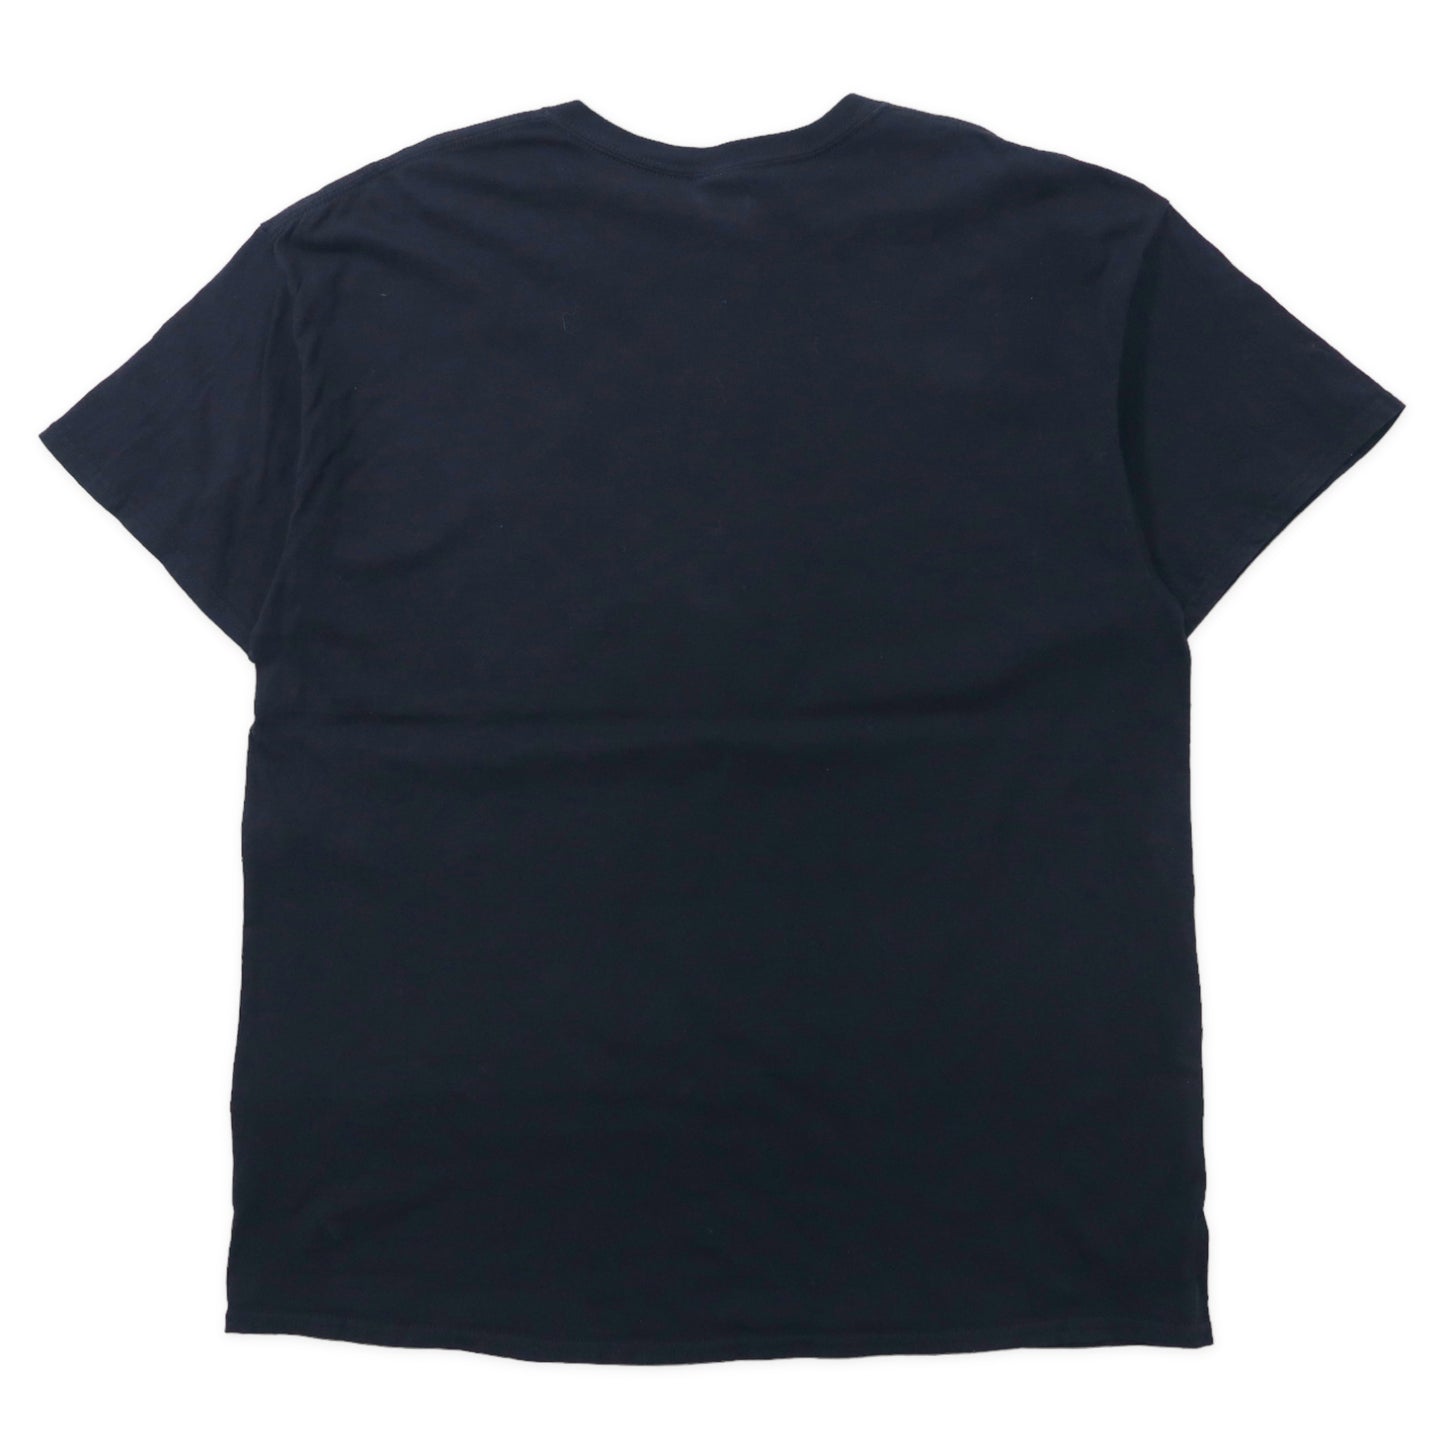 GILDAN プリントTシャツ XL ブラック コットン SCHEELS ビッグサイズ